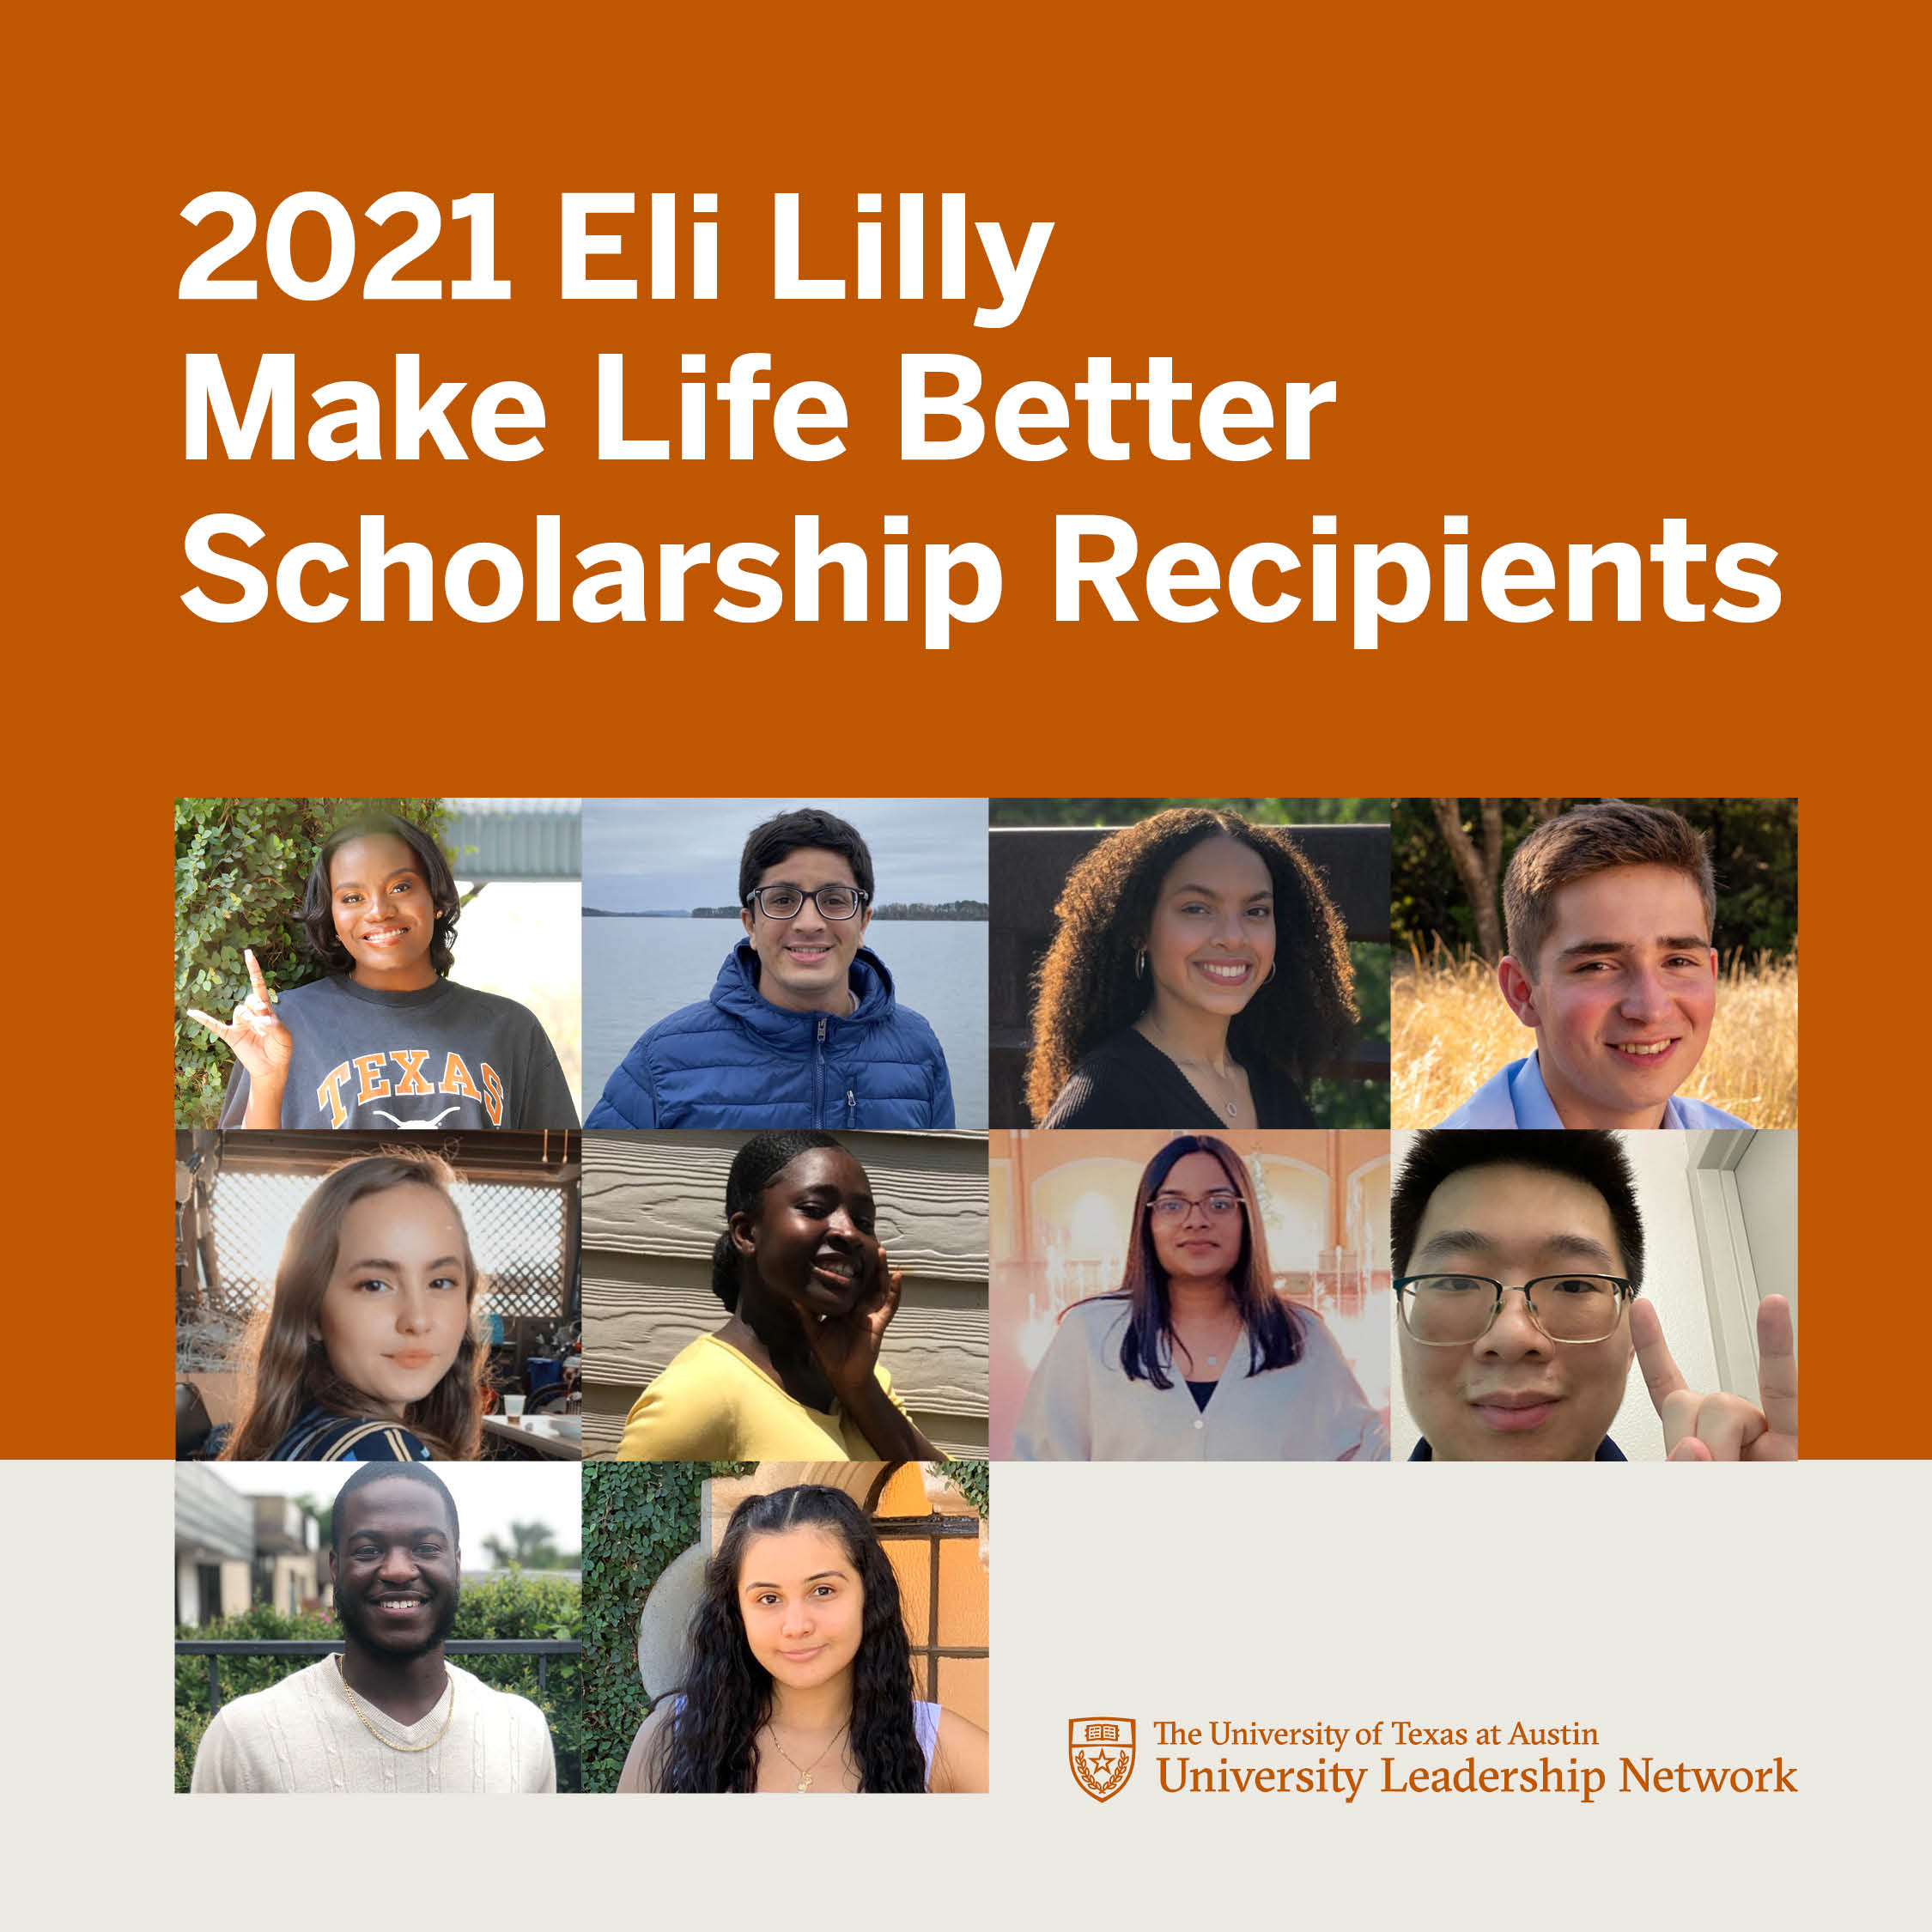 2021 Eli Lilly Make Life Better Scholarship Recipients